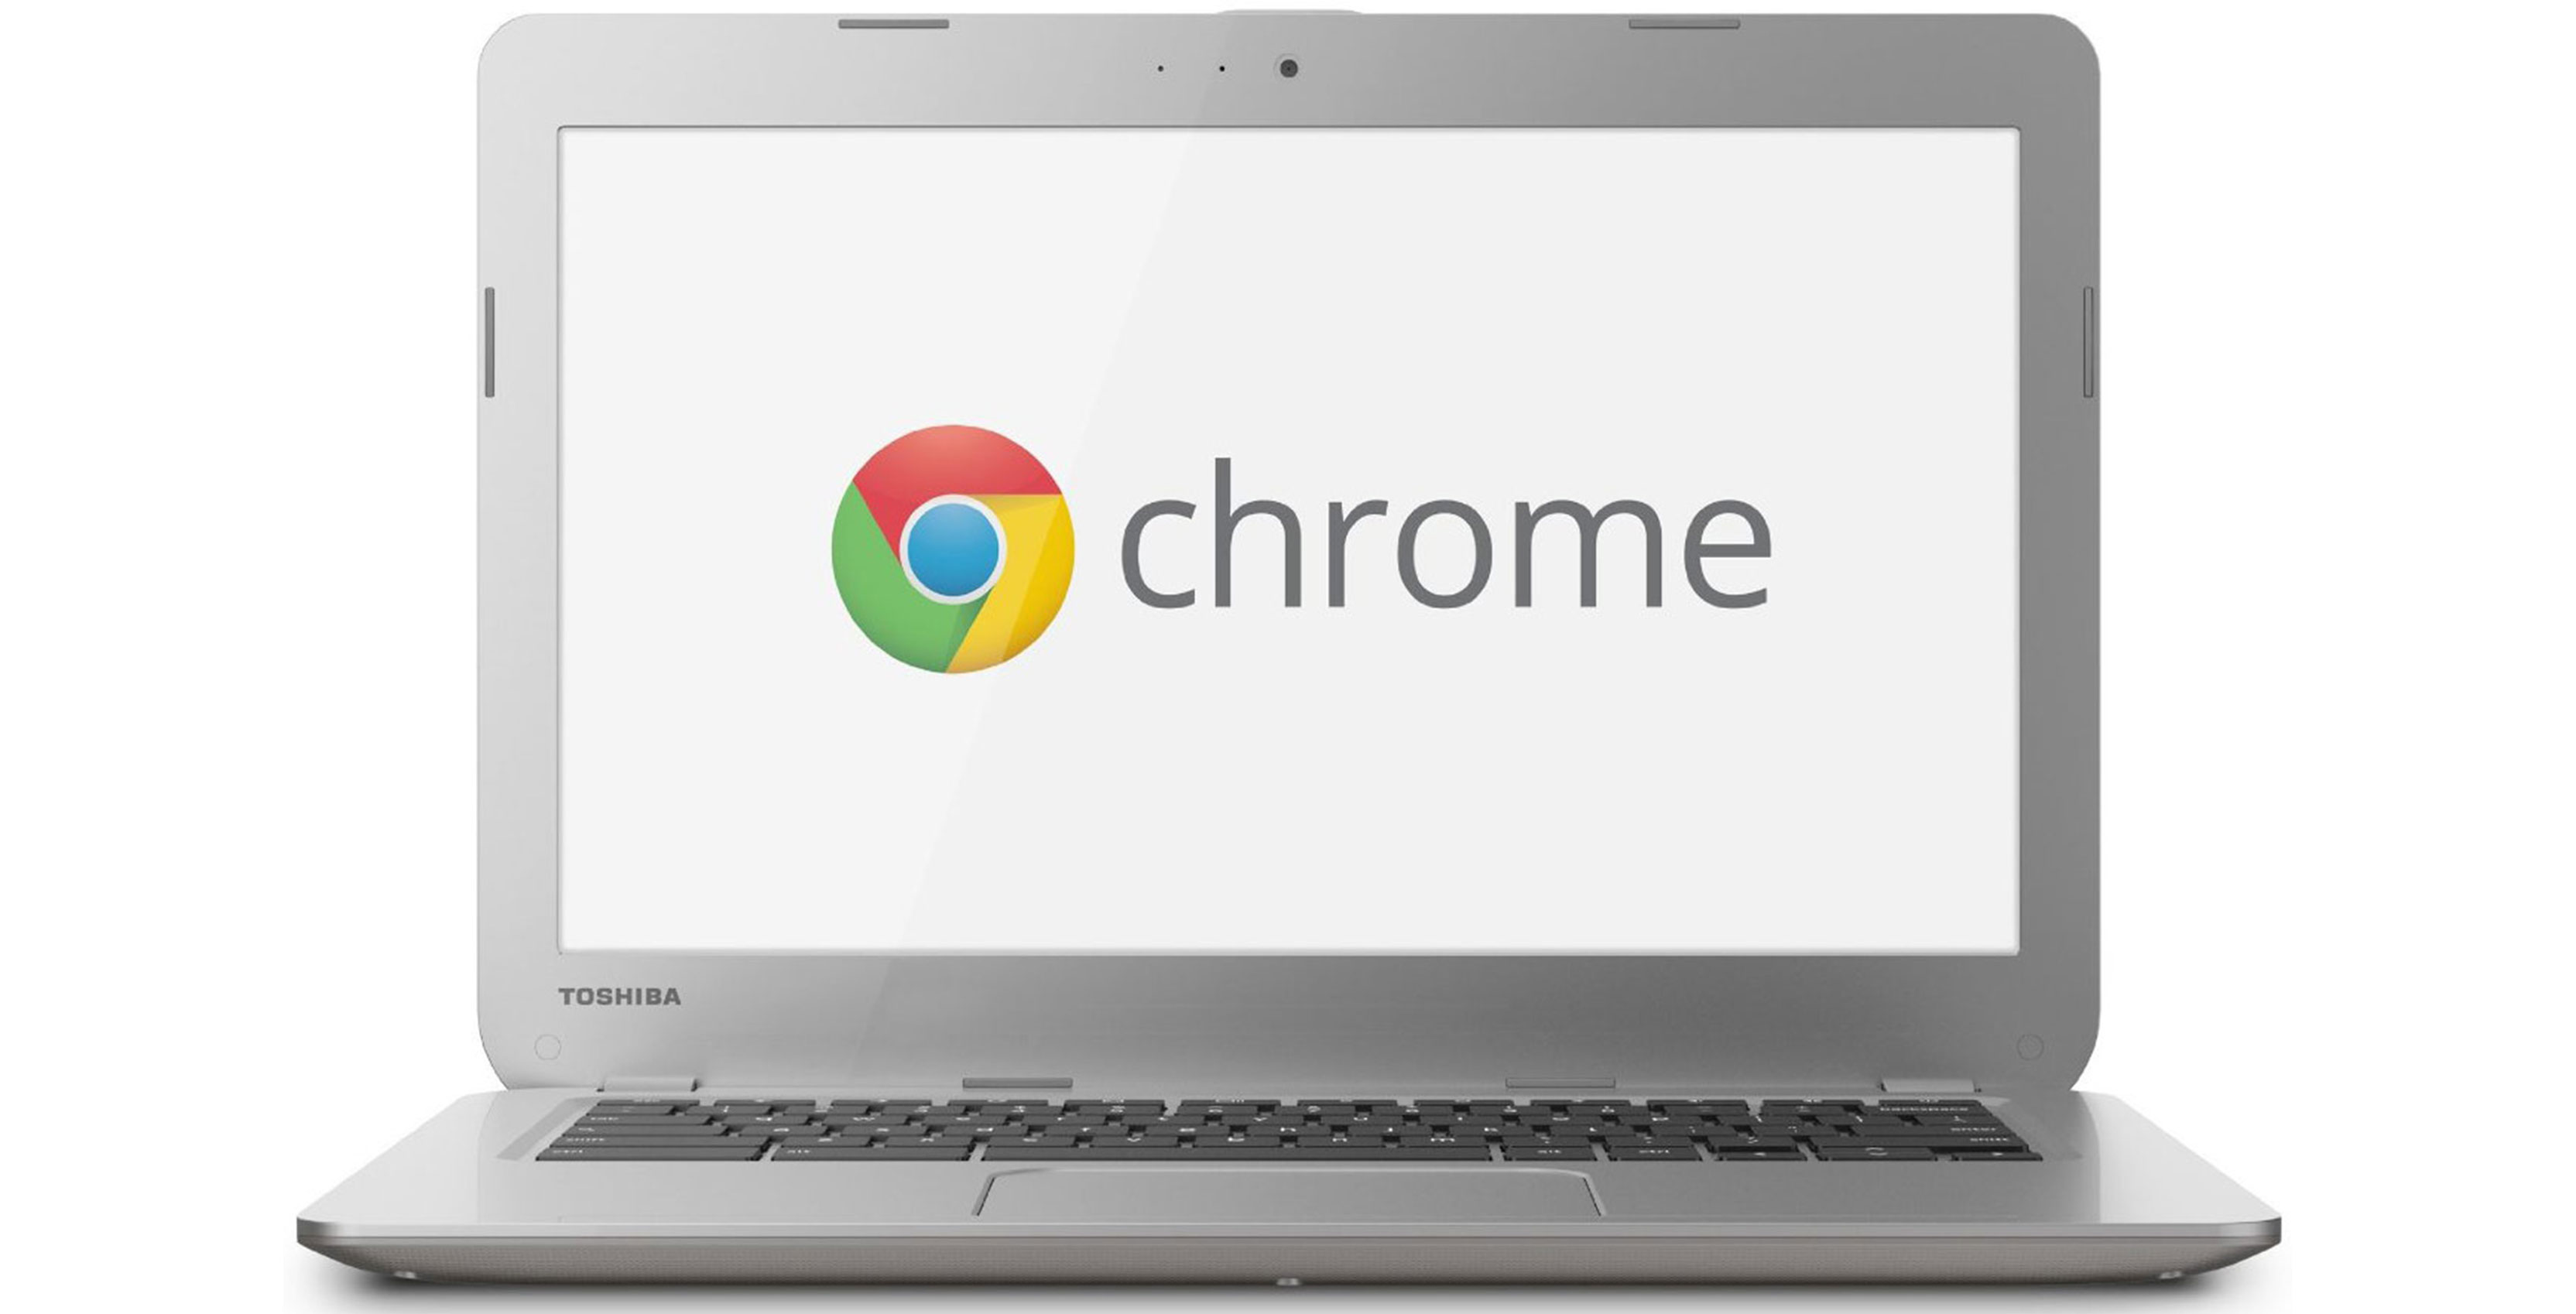 Google Chrome on Toshiba Chromebook